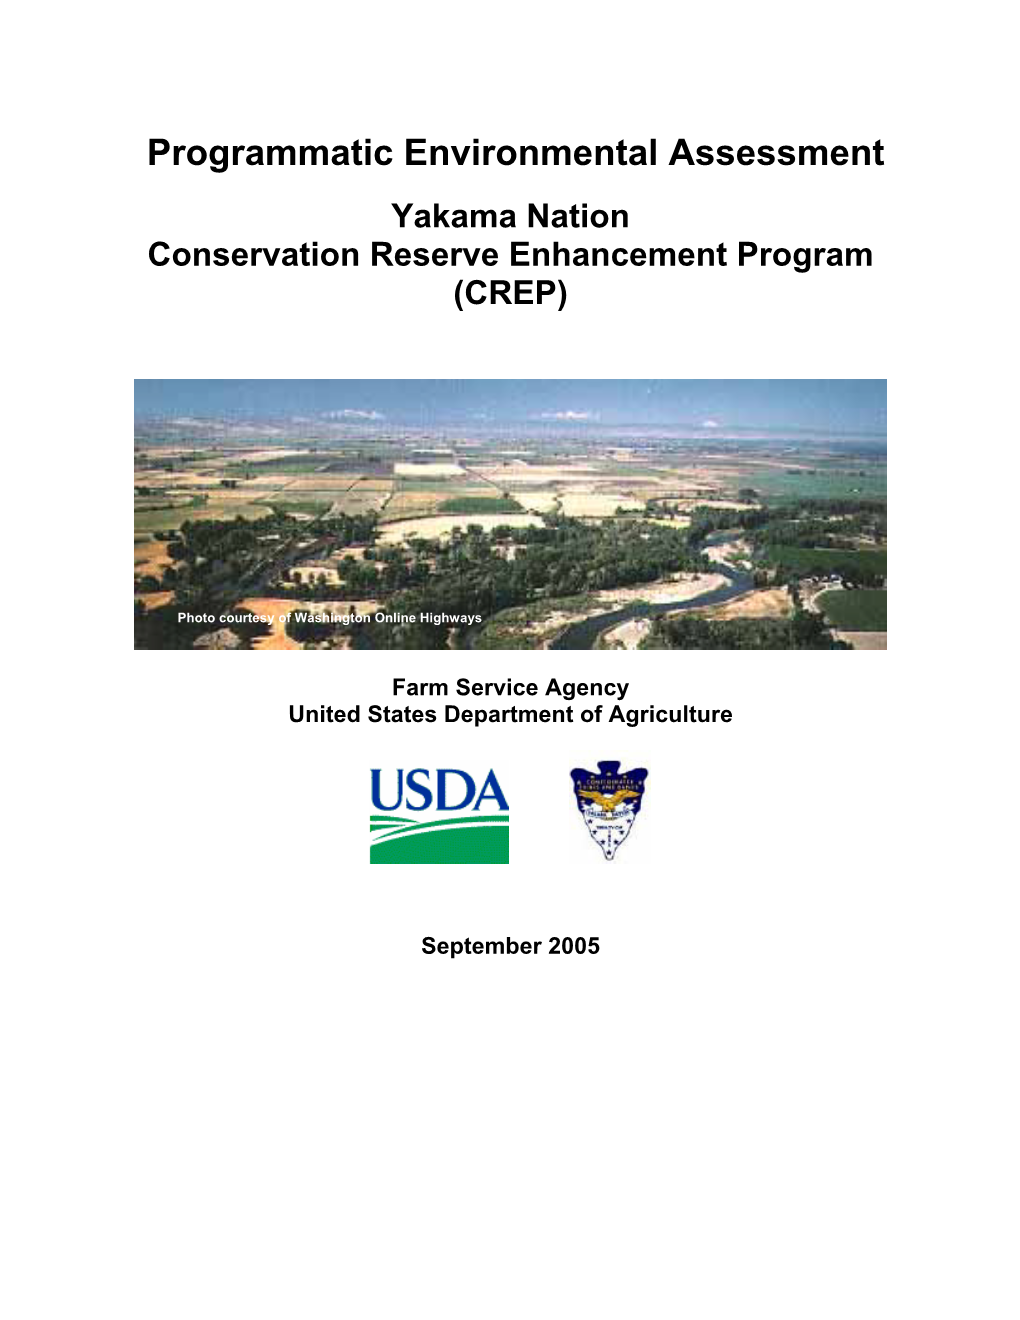 Yakama Nation Conservation Reserve Enhancement Program (CREP)